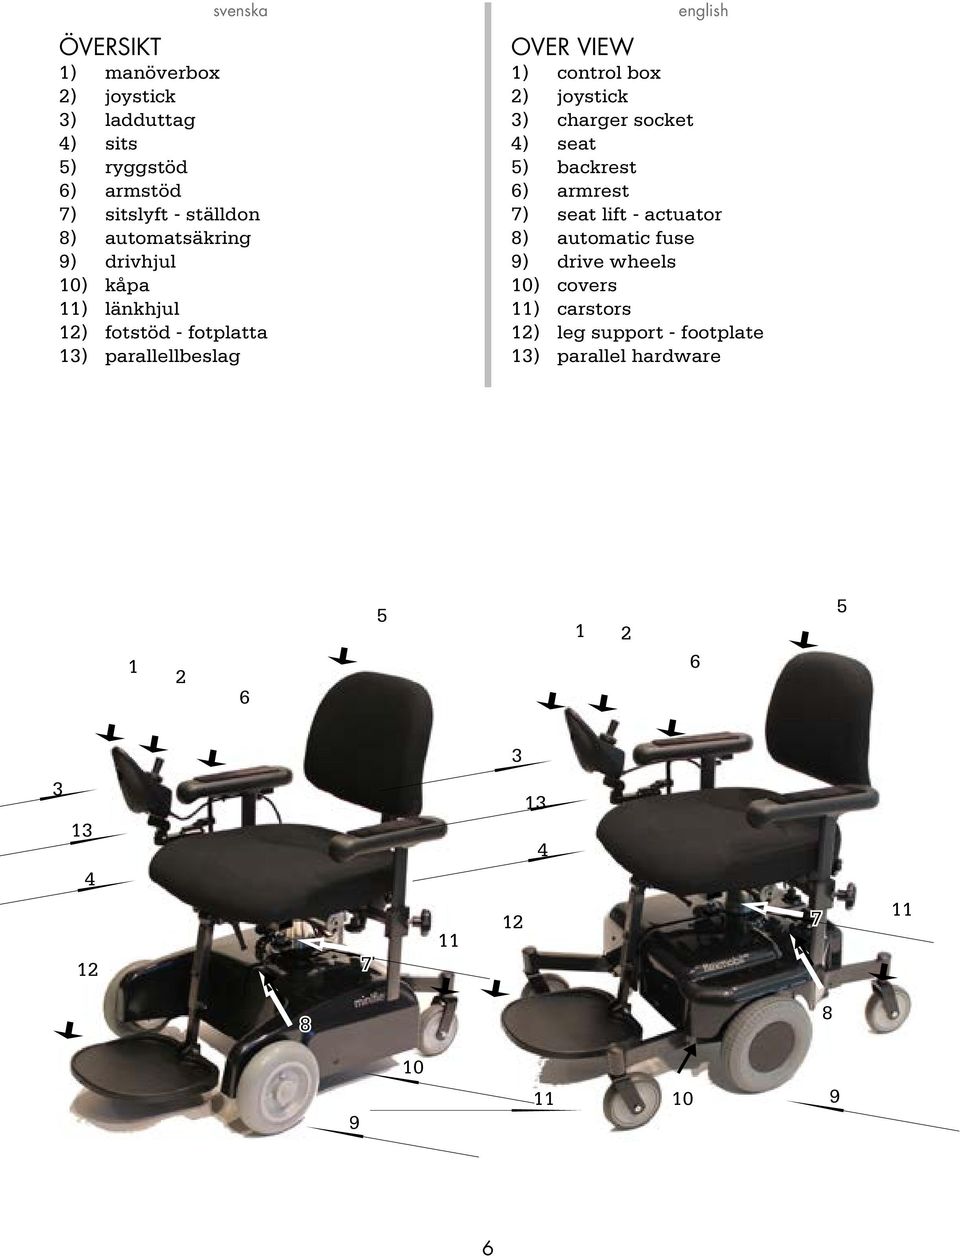 box ) joystick ) charger socket 4) seat 5) backrest 6) armrest 7) seat lift - actuator 8) automatic fuse